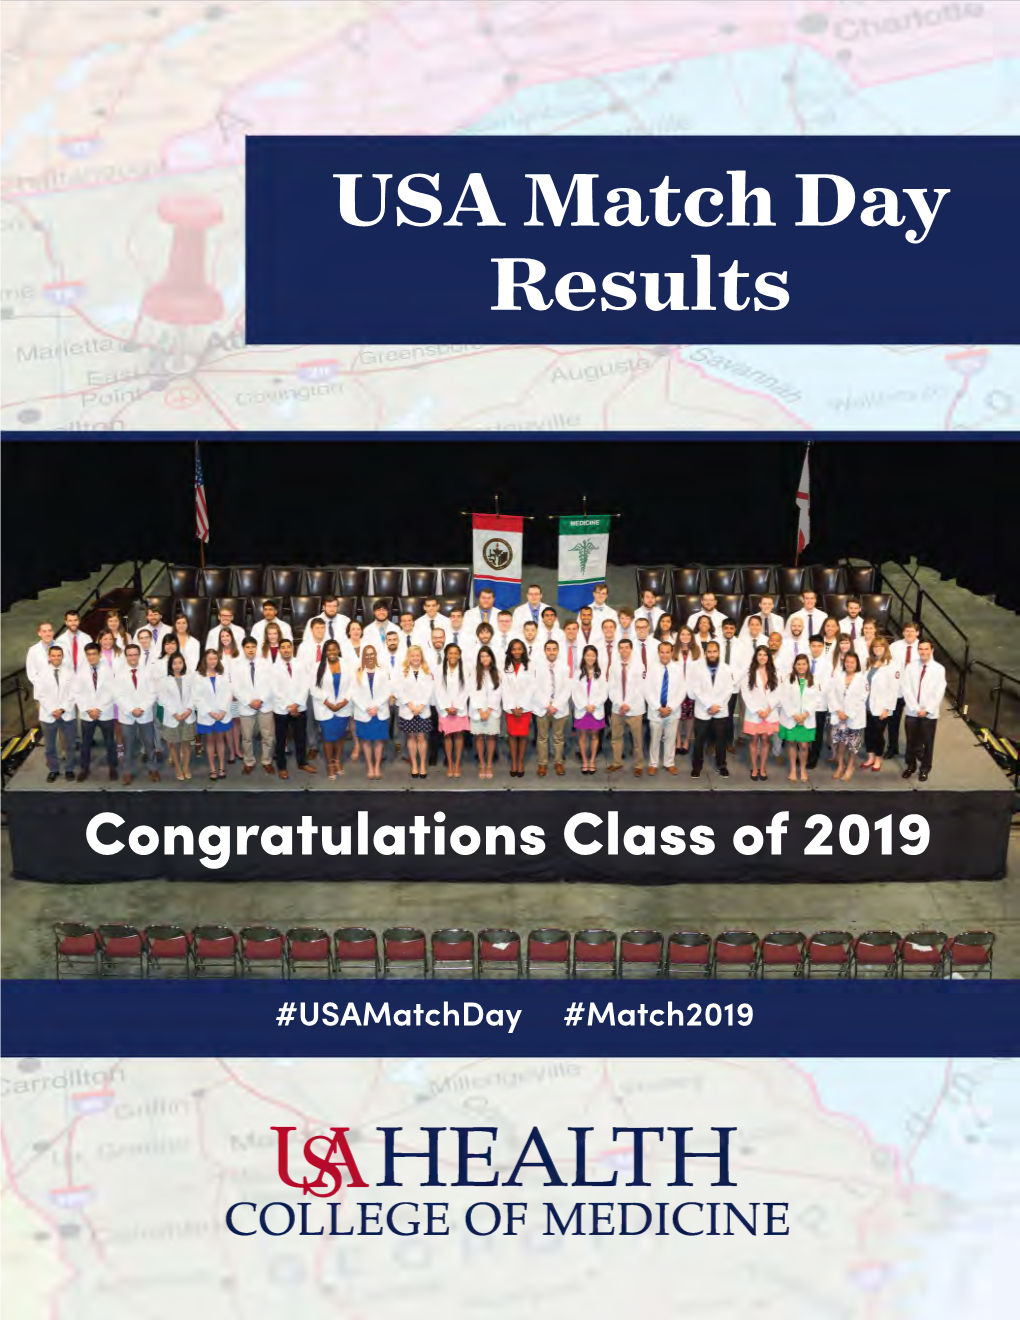 USA Match Day 2019 Results